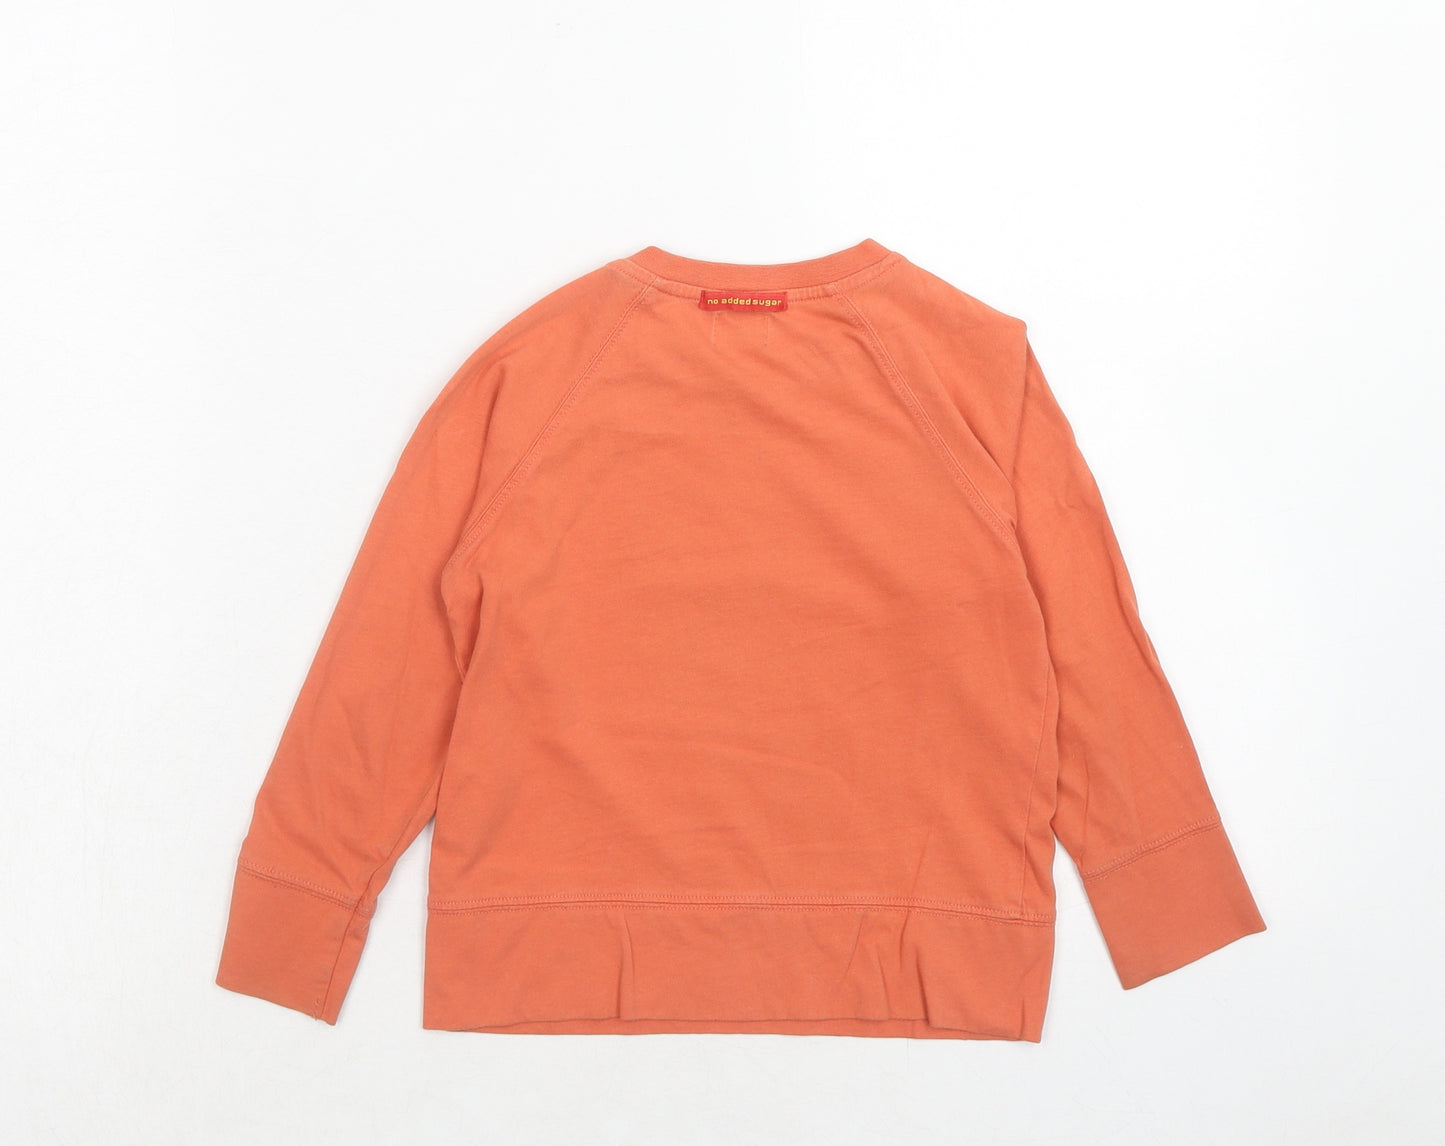 No Added Sugar Boys Orange Cotton Basic T-Shirt Size 4 Years Round Neck Pullover